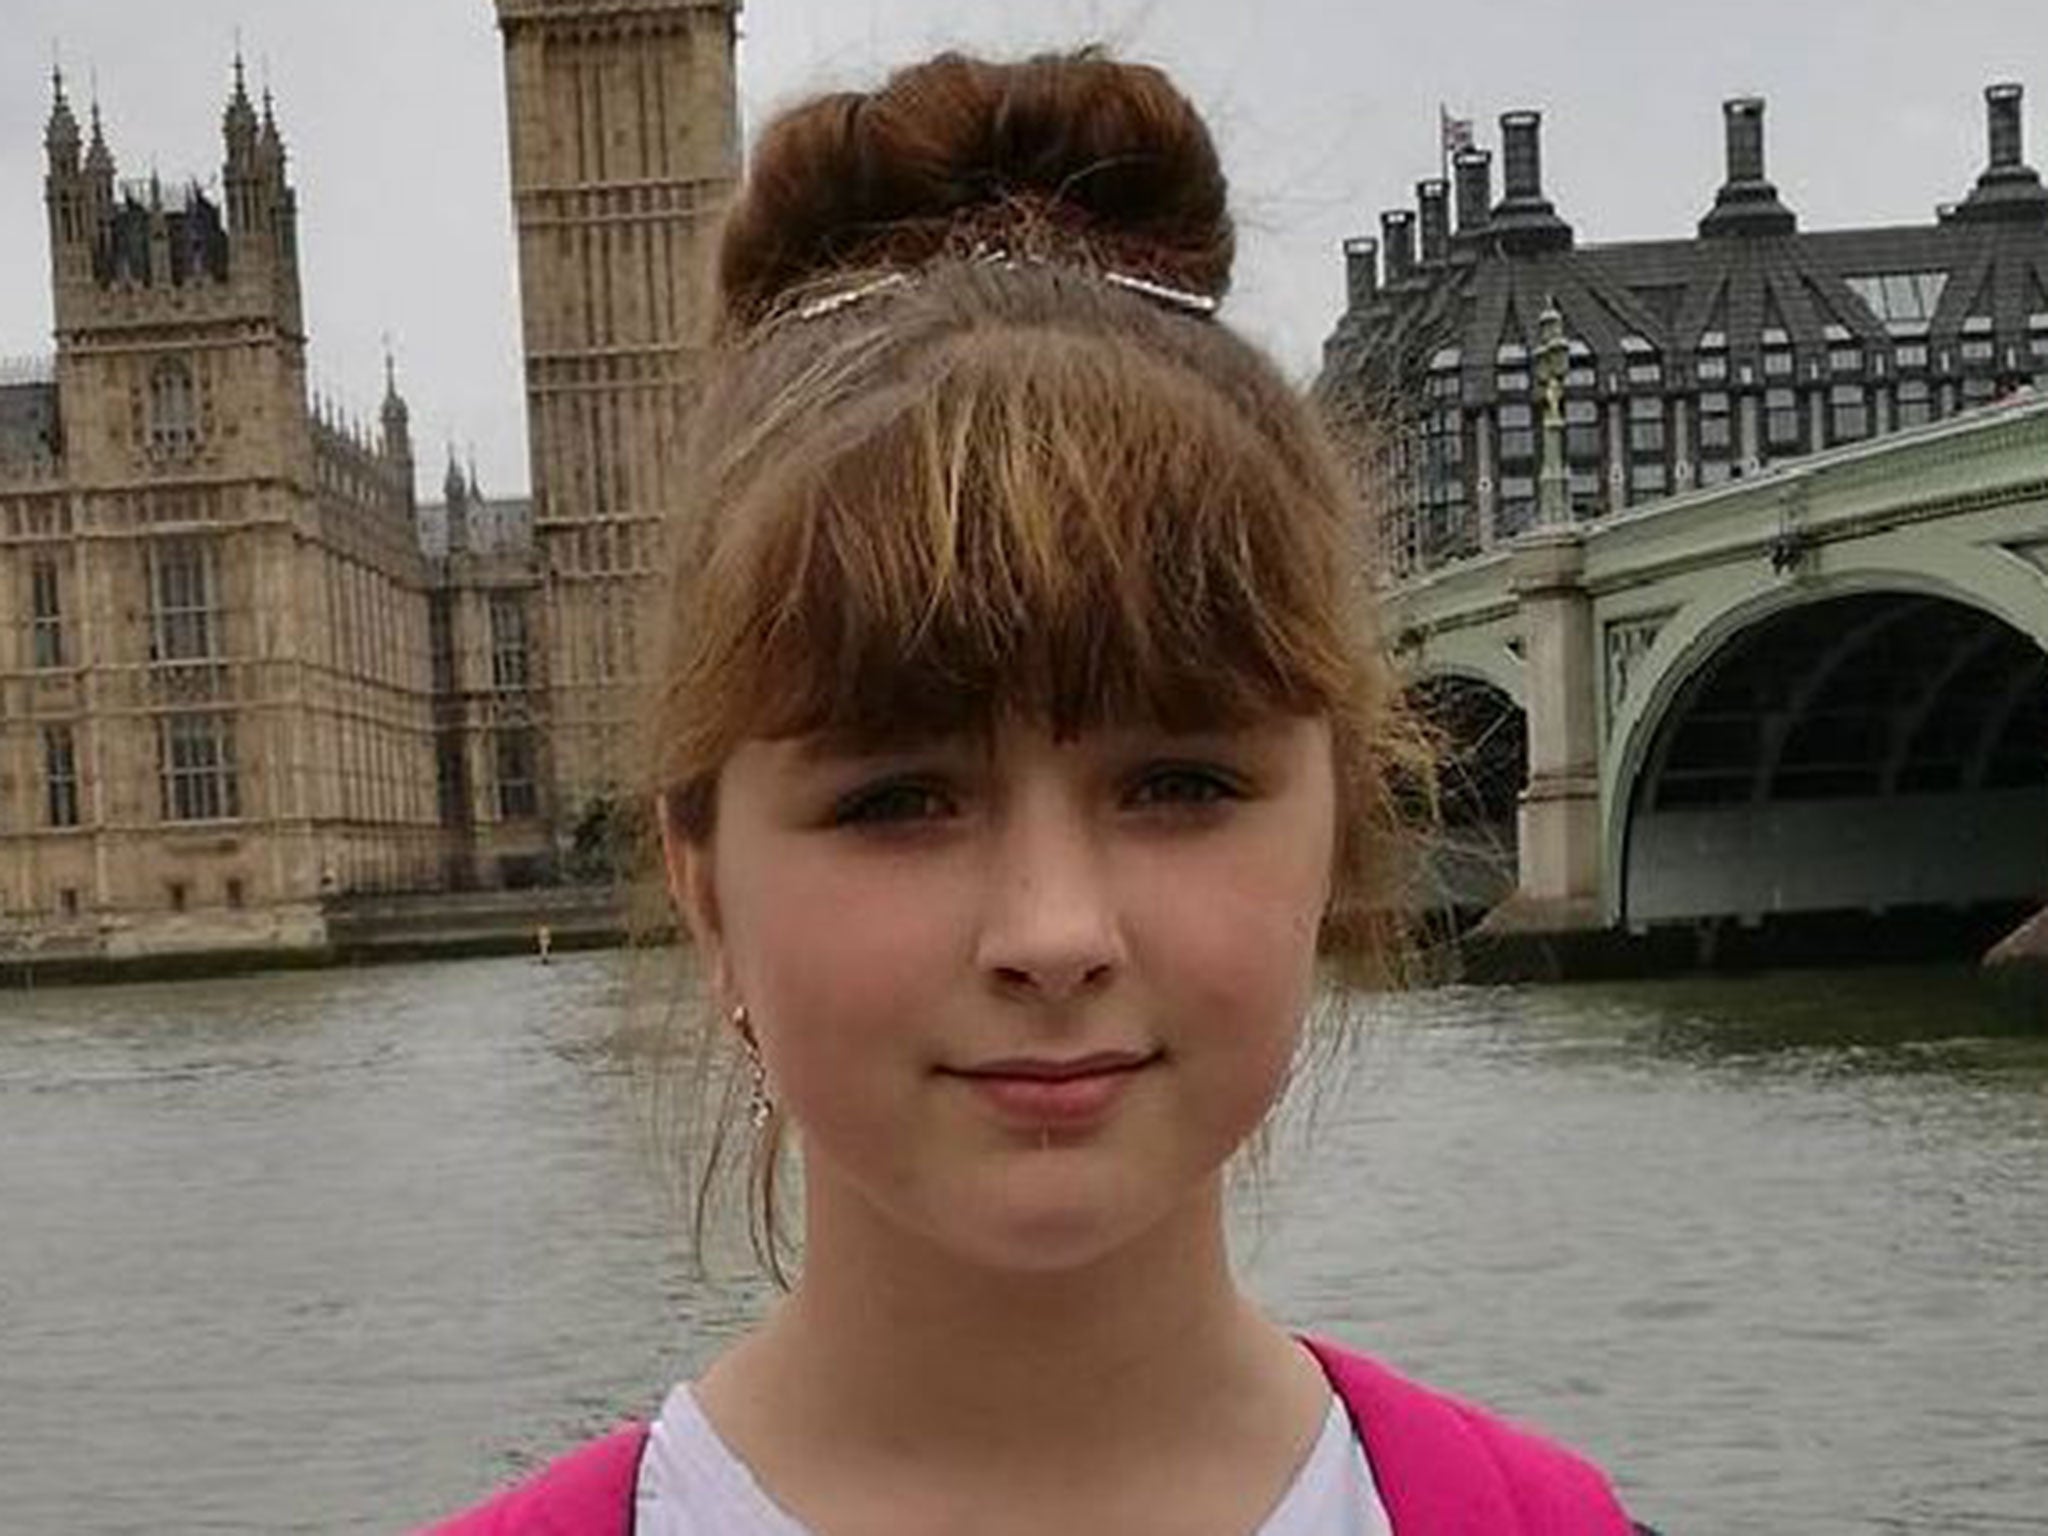 Lithuanian-born Vicktorija Sokolova, 14, was found dead in Wolverhampton's West Park on 12 April